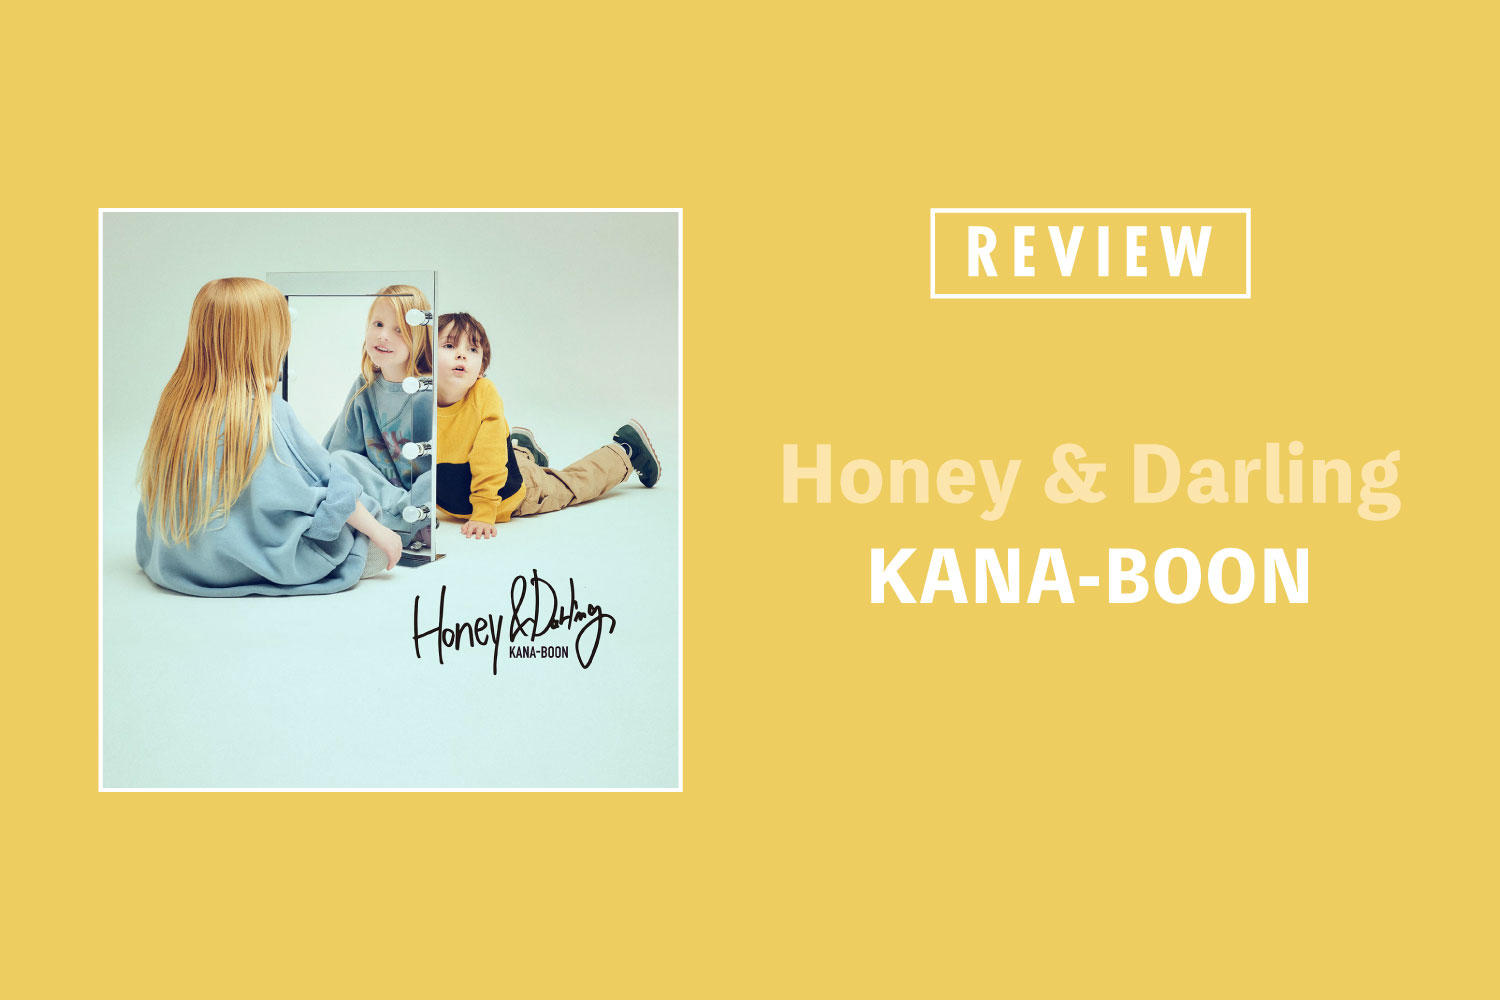 KANA-BOON「Honey & Darling」──集大成であると同時に、新たな一歩への期待を感じさせる傑作